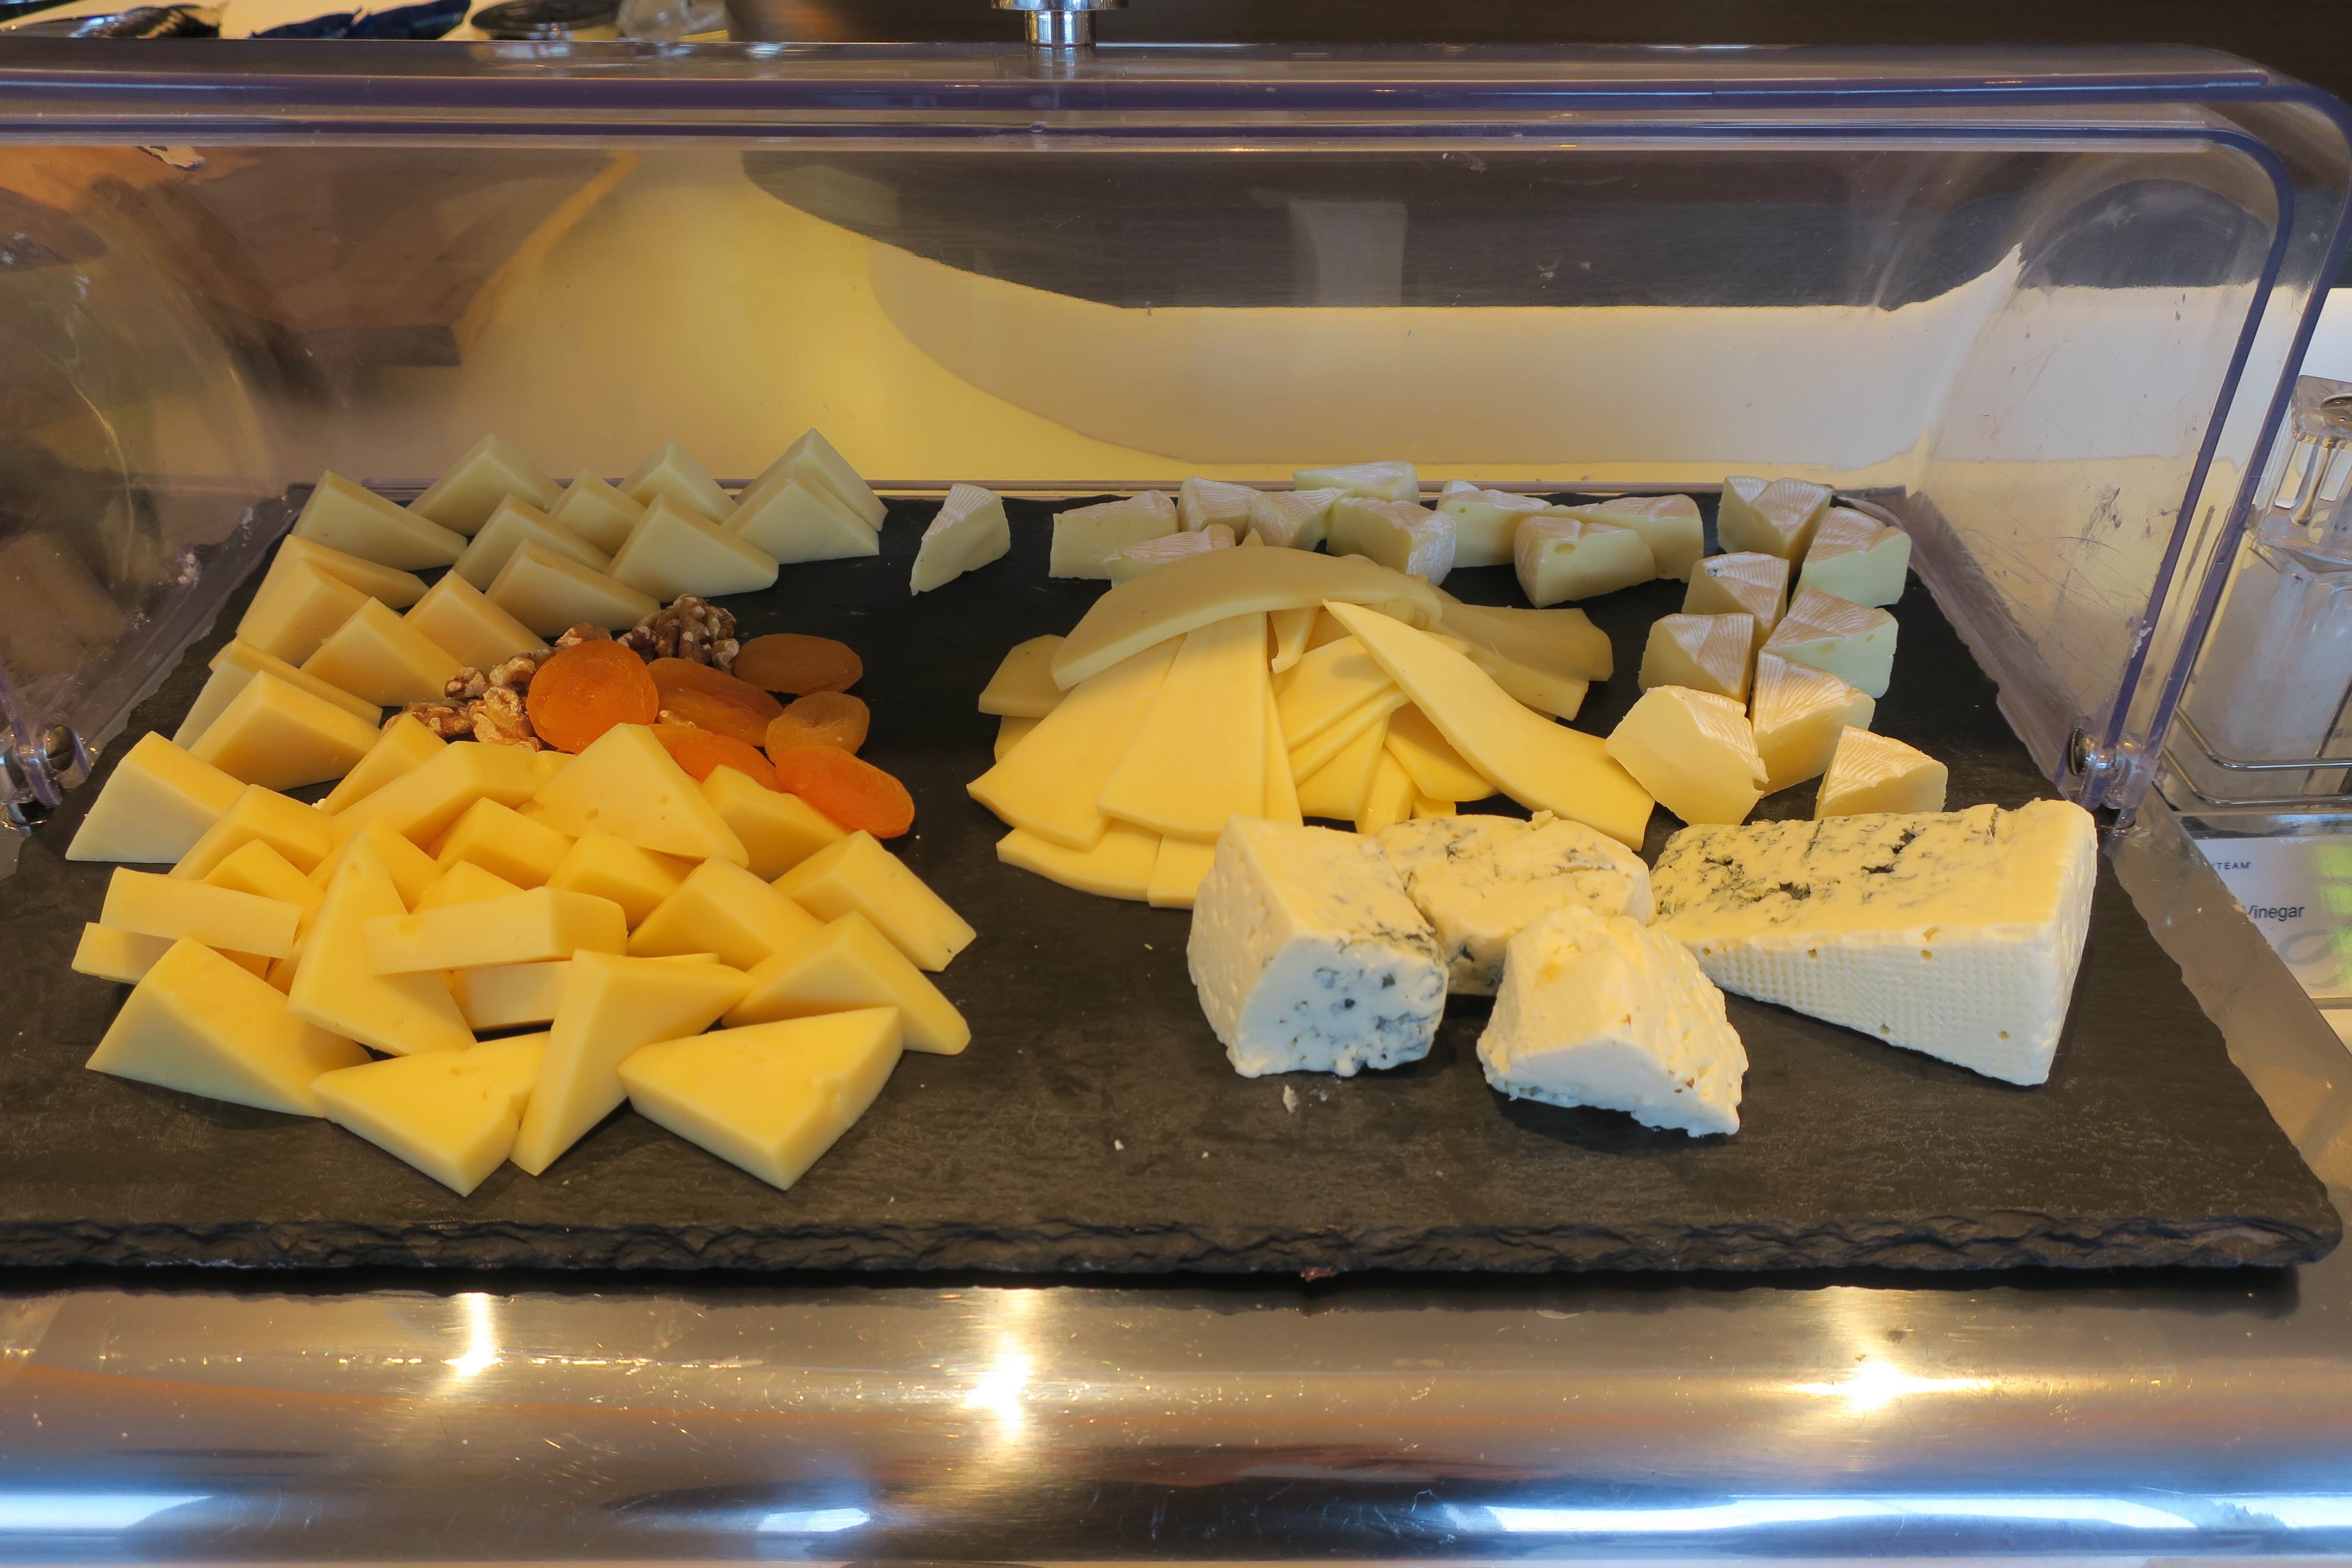 Skyteam Lounge Sydney cheeses